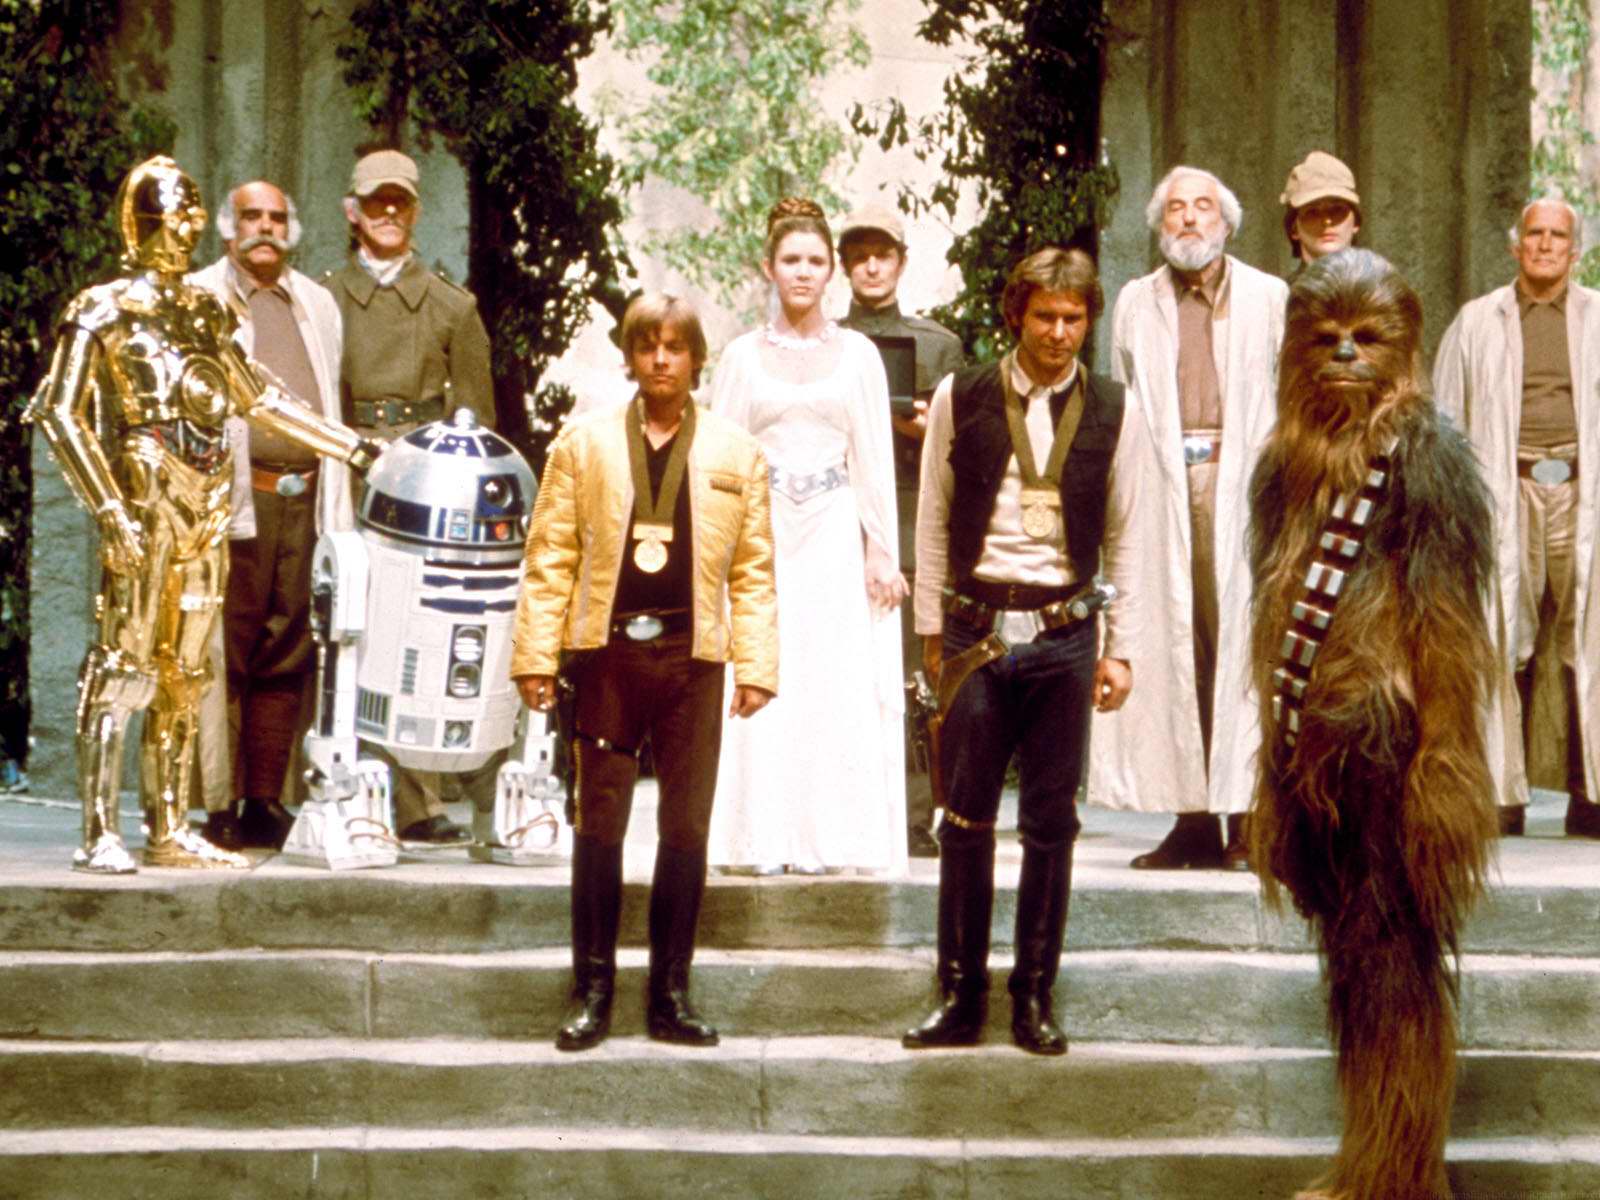 Princess Leia Star Wars The Last Jedi Wallpapers